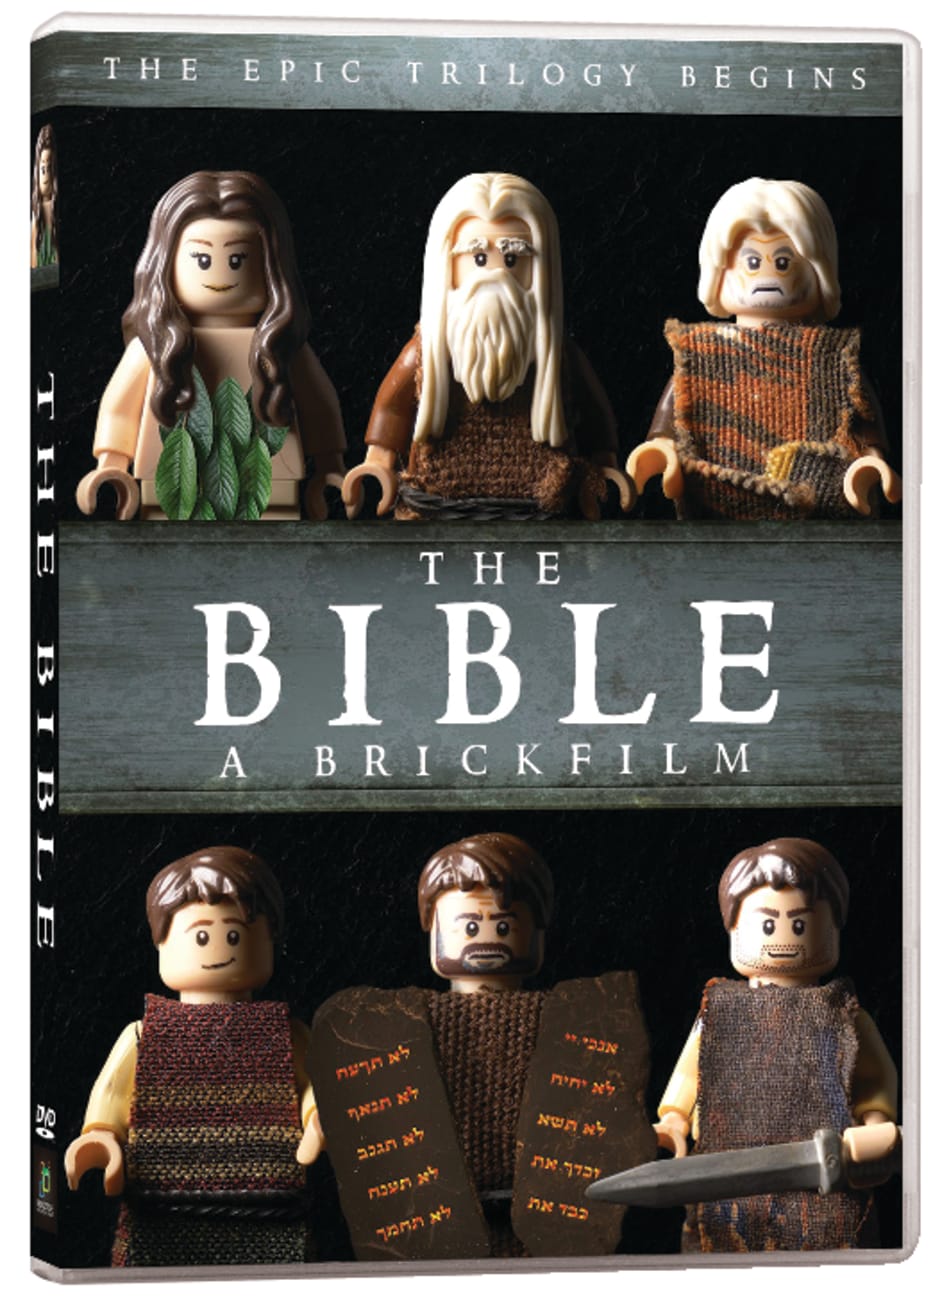 The Bible: A Brickfilm DVD